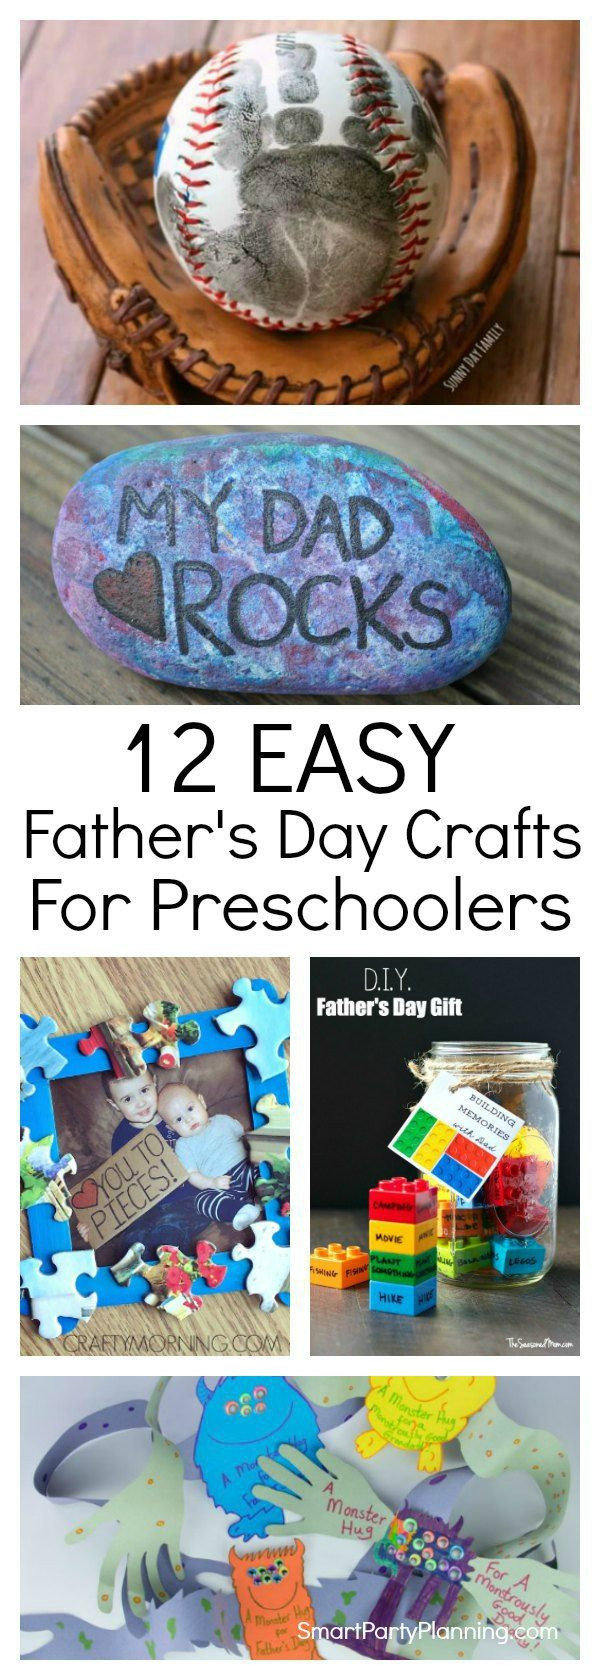 Preschool Fathers Day Gift Ideas
 Best 25 Dad crafts ideas on Pinterest